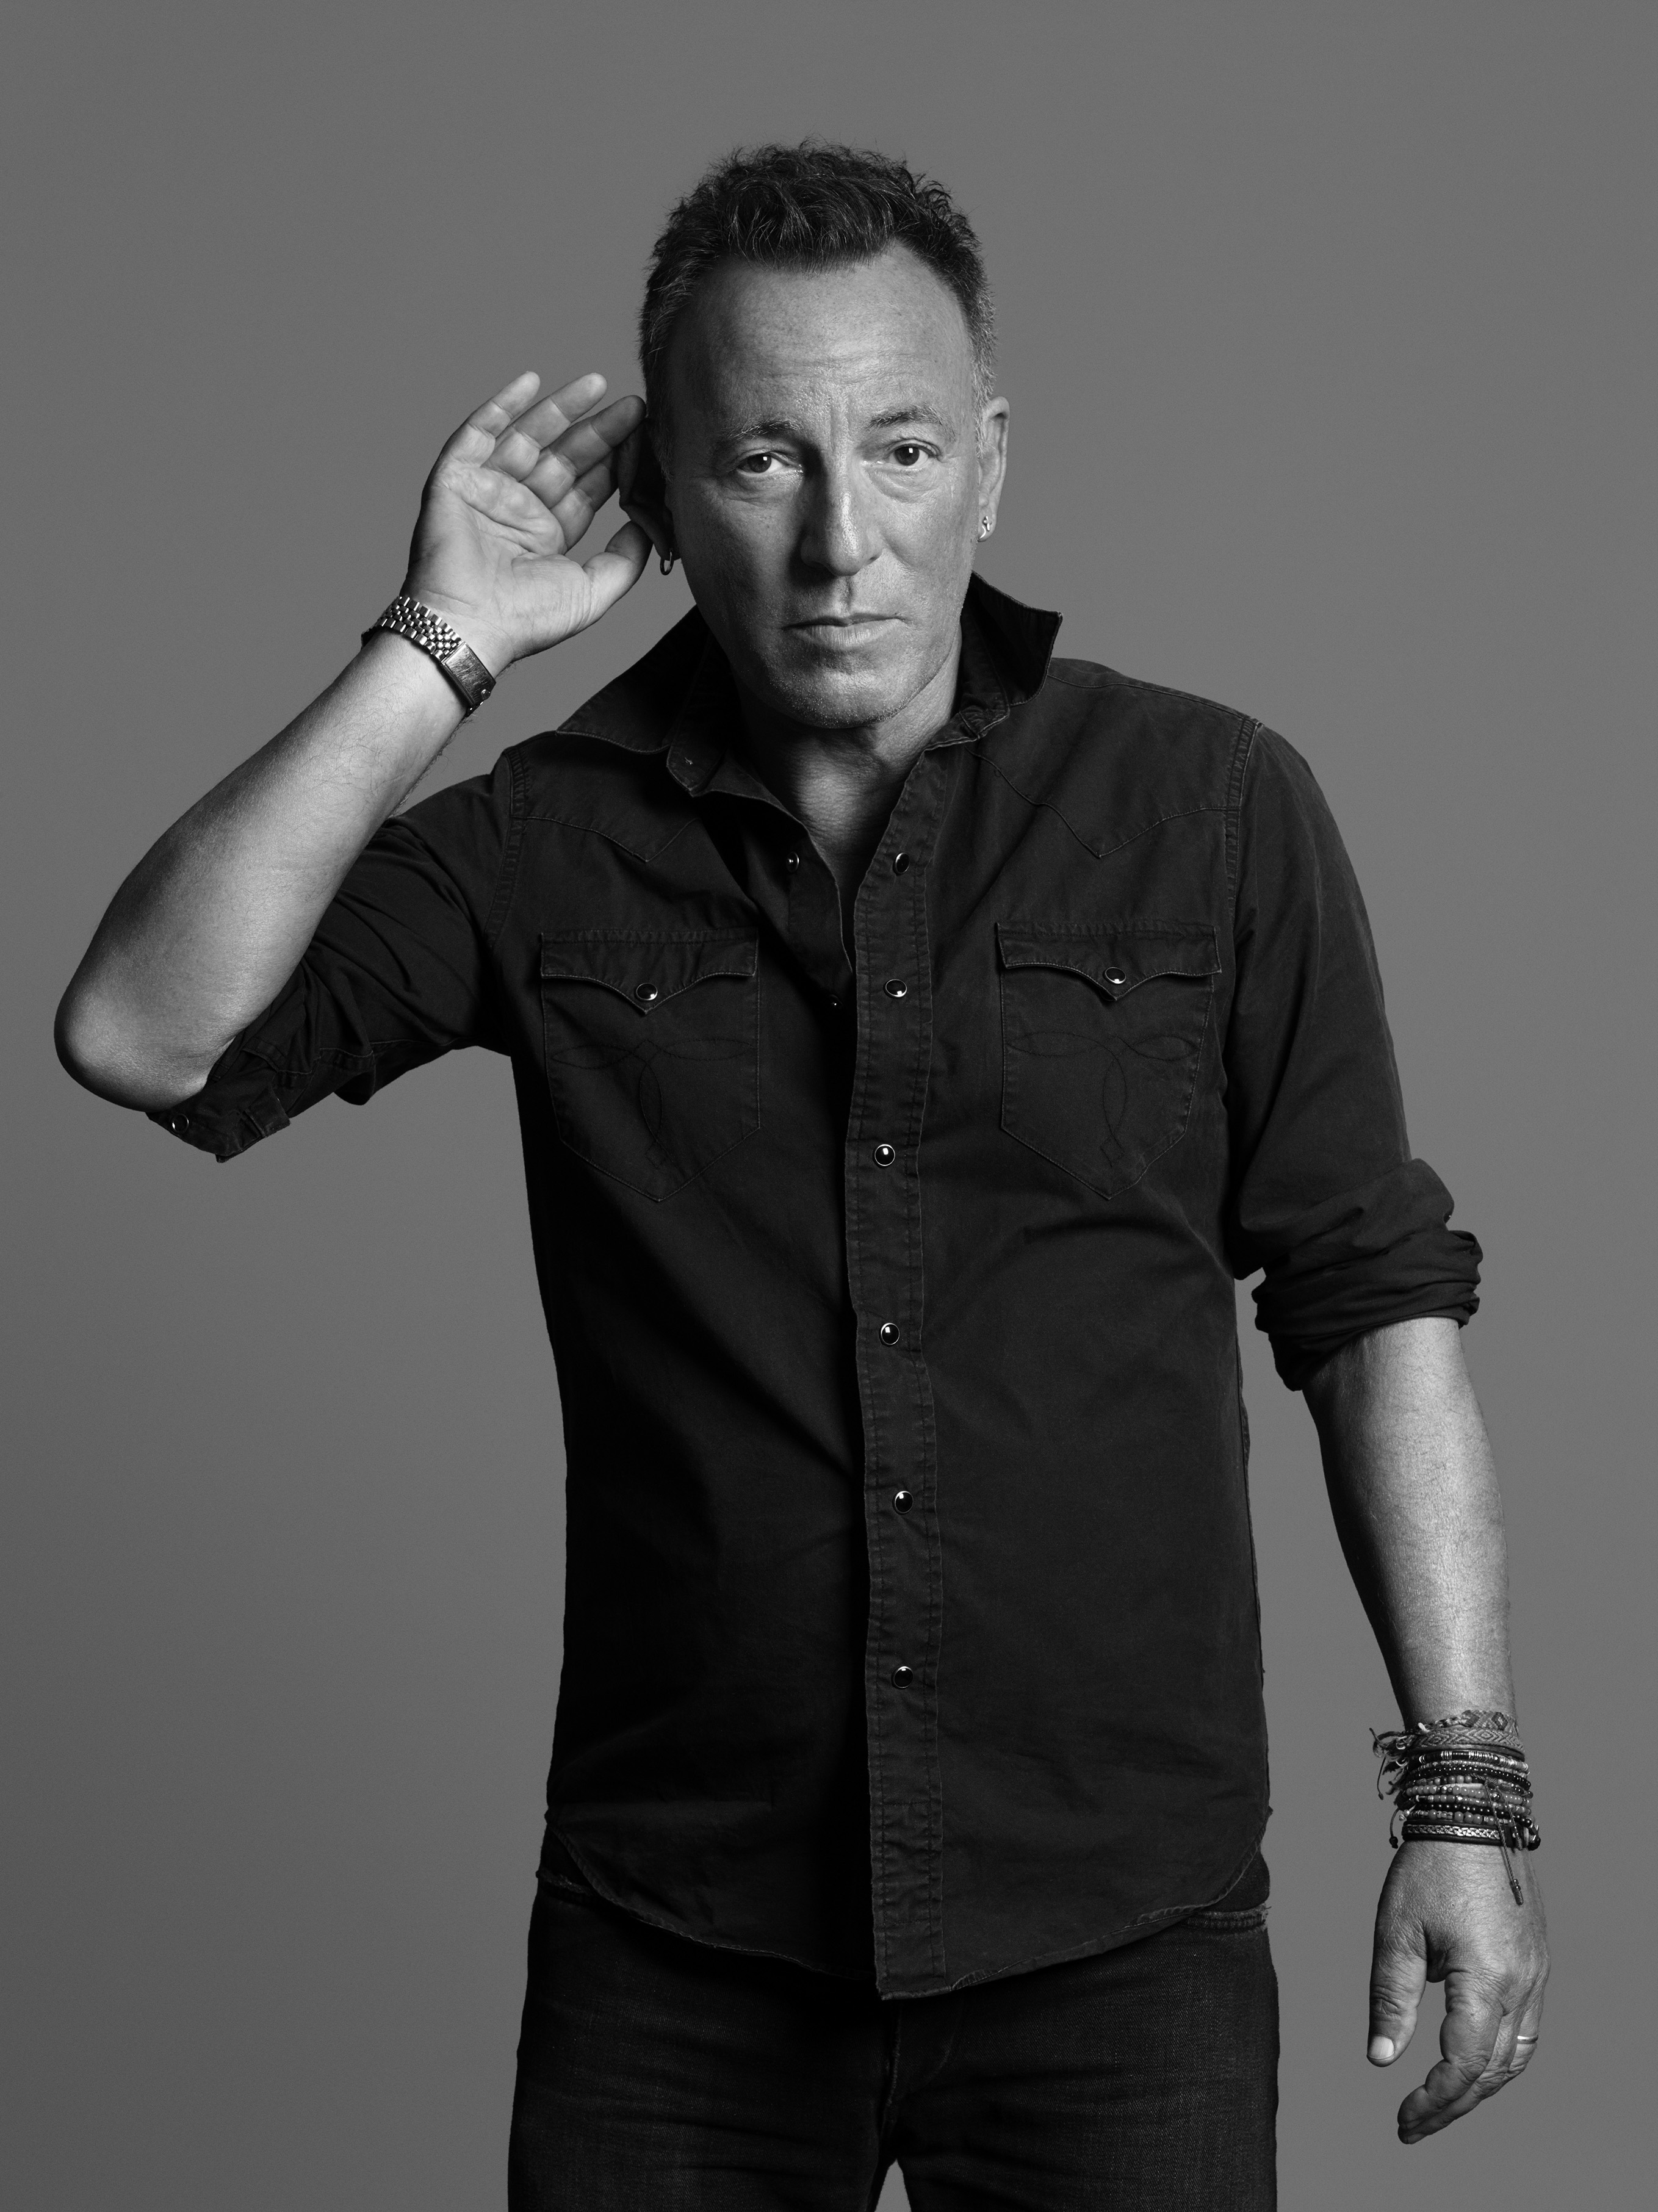 Bruce_Springsteen_joins_Hear-the-world-as-ambassador